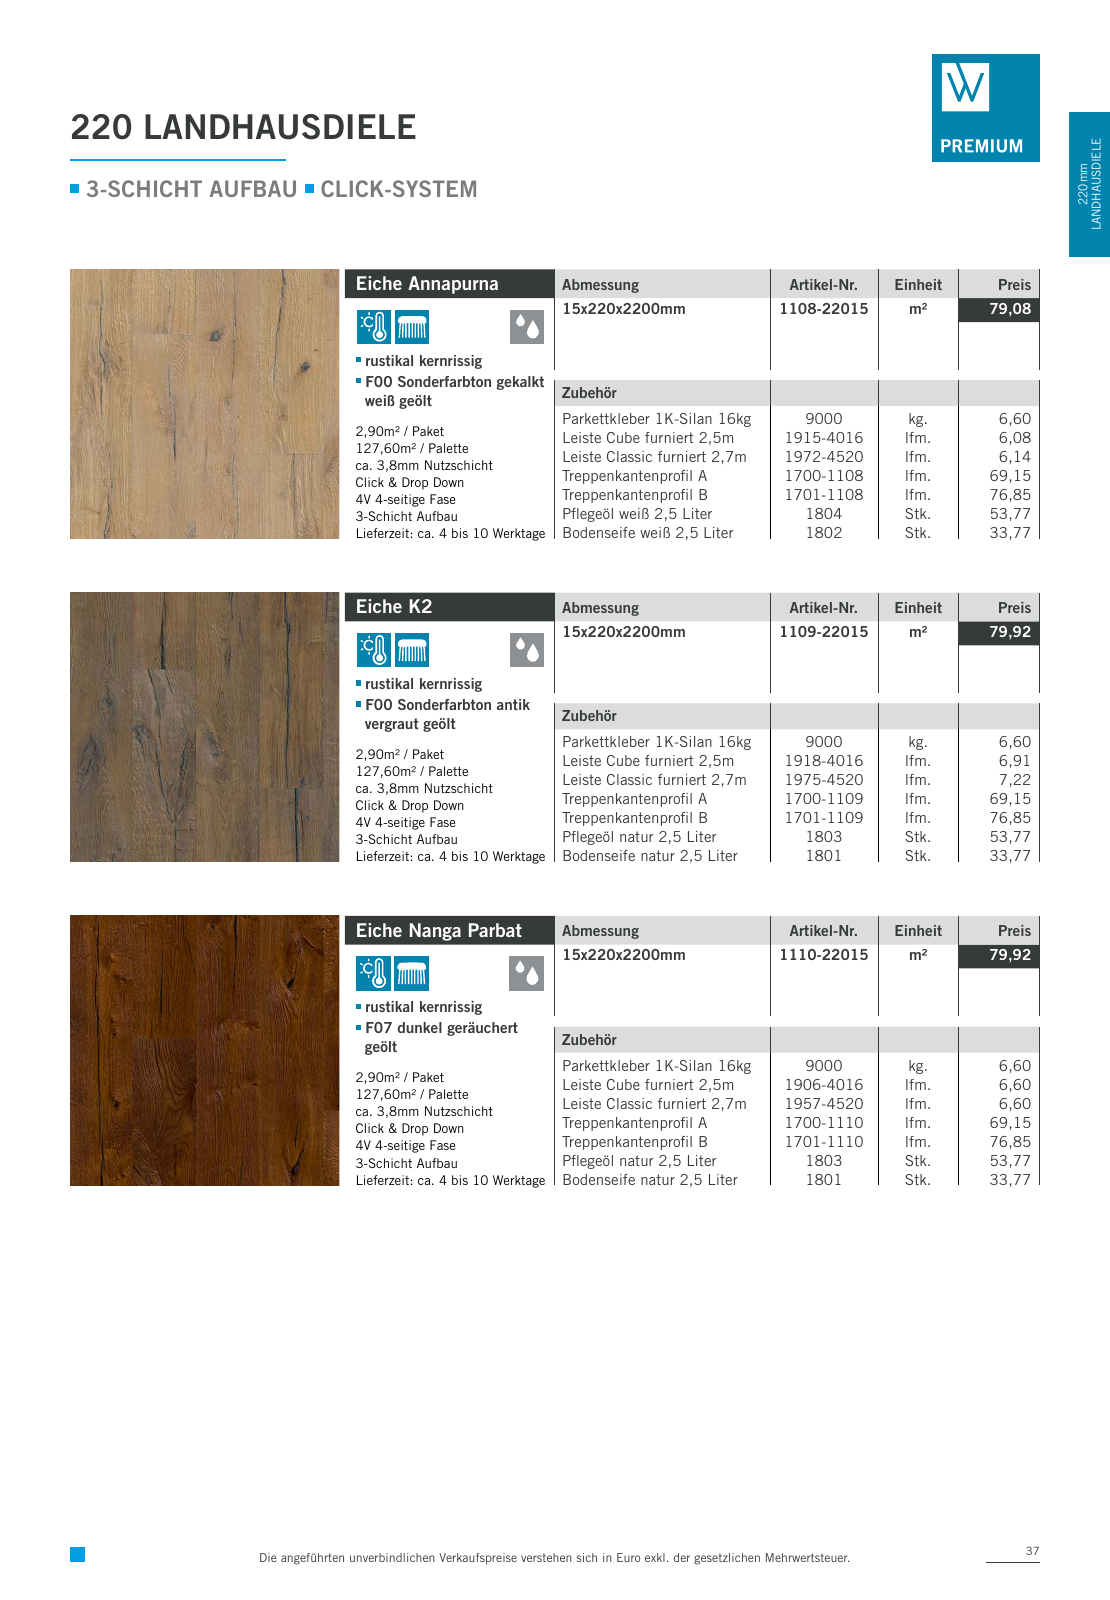 Vorschau Woodbase Preisliste 06/2021 Seite 37